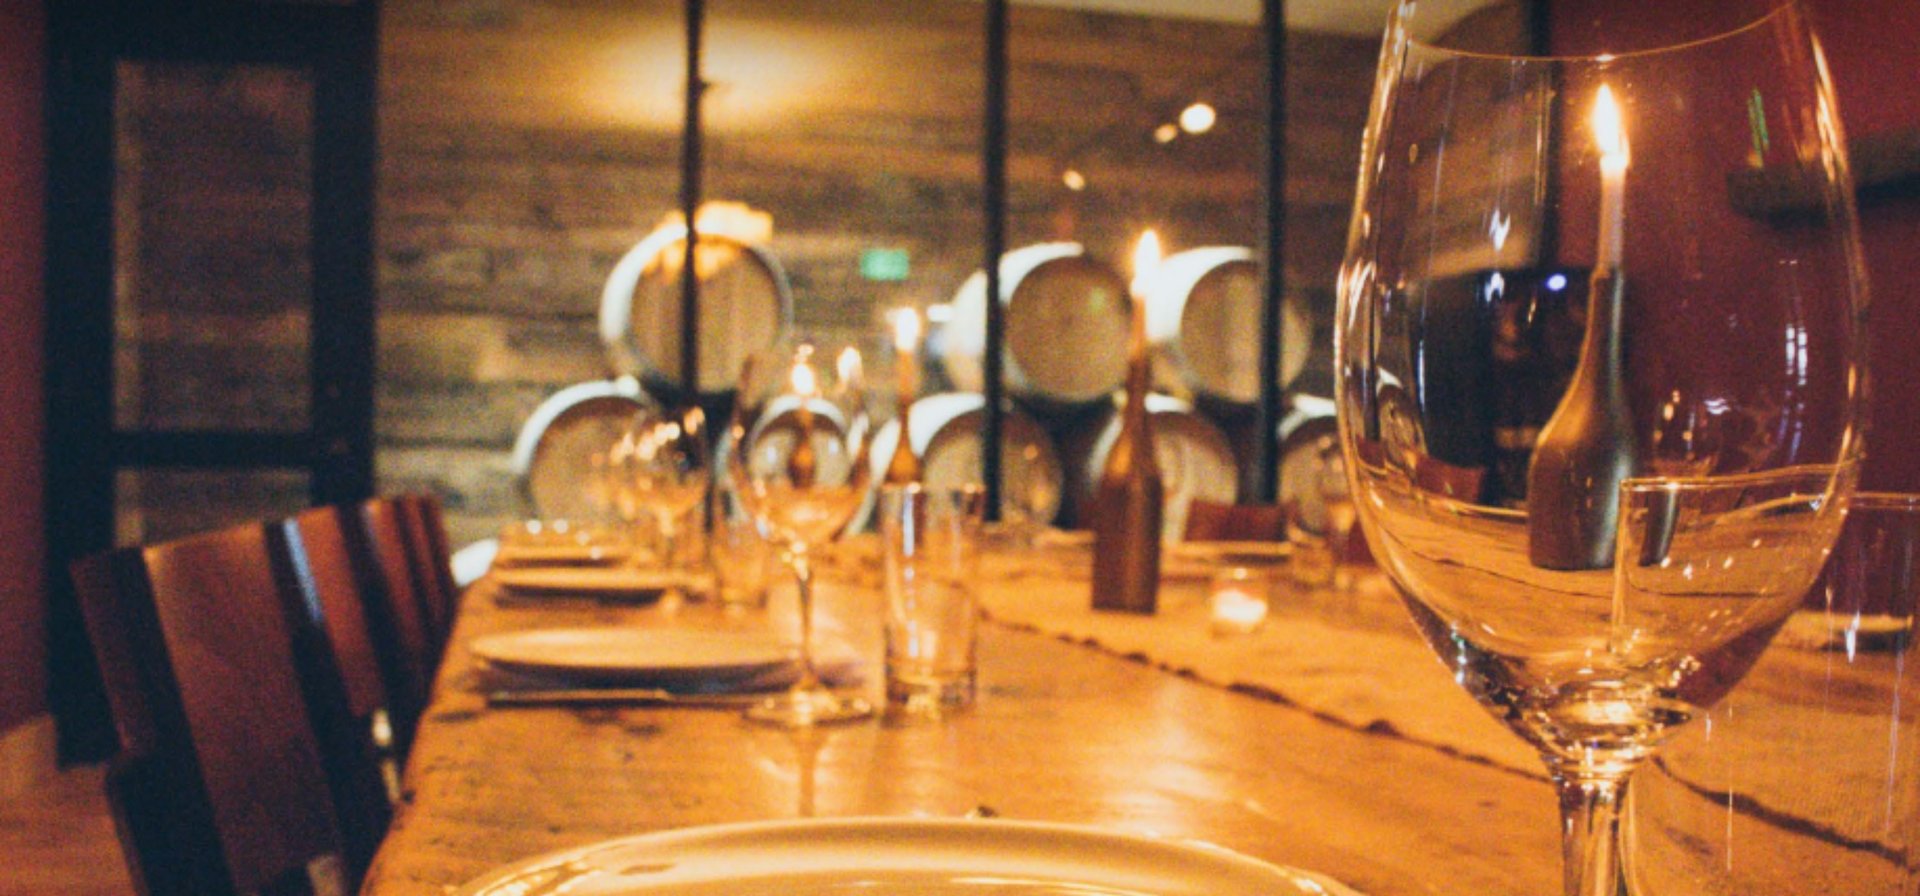 City Winery - Atlanta - The Barrel Room Restaurant & Wine Bar ...